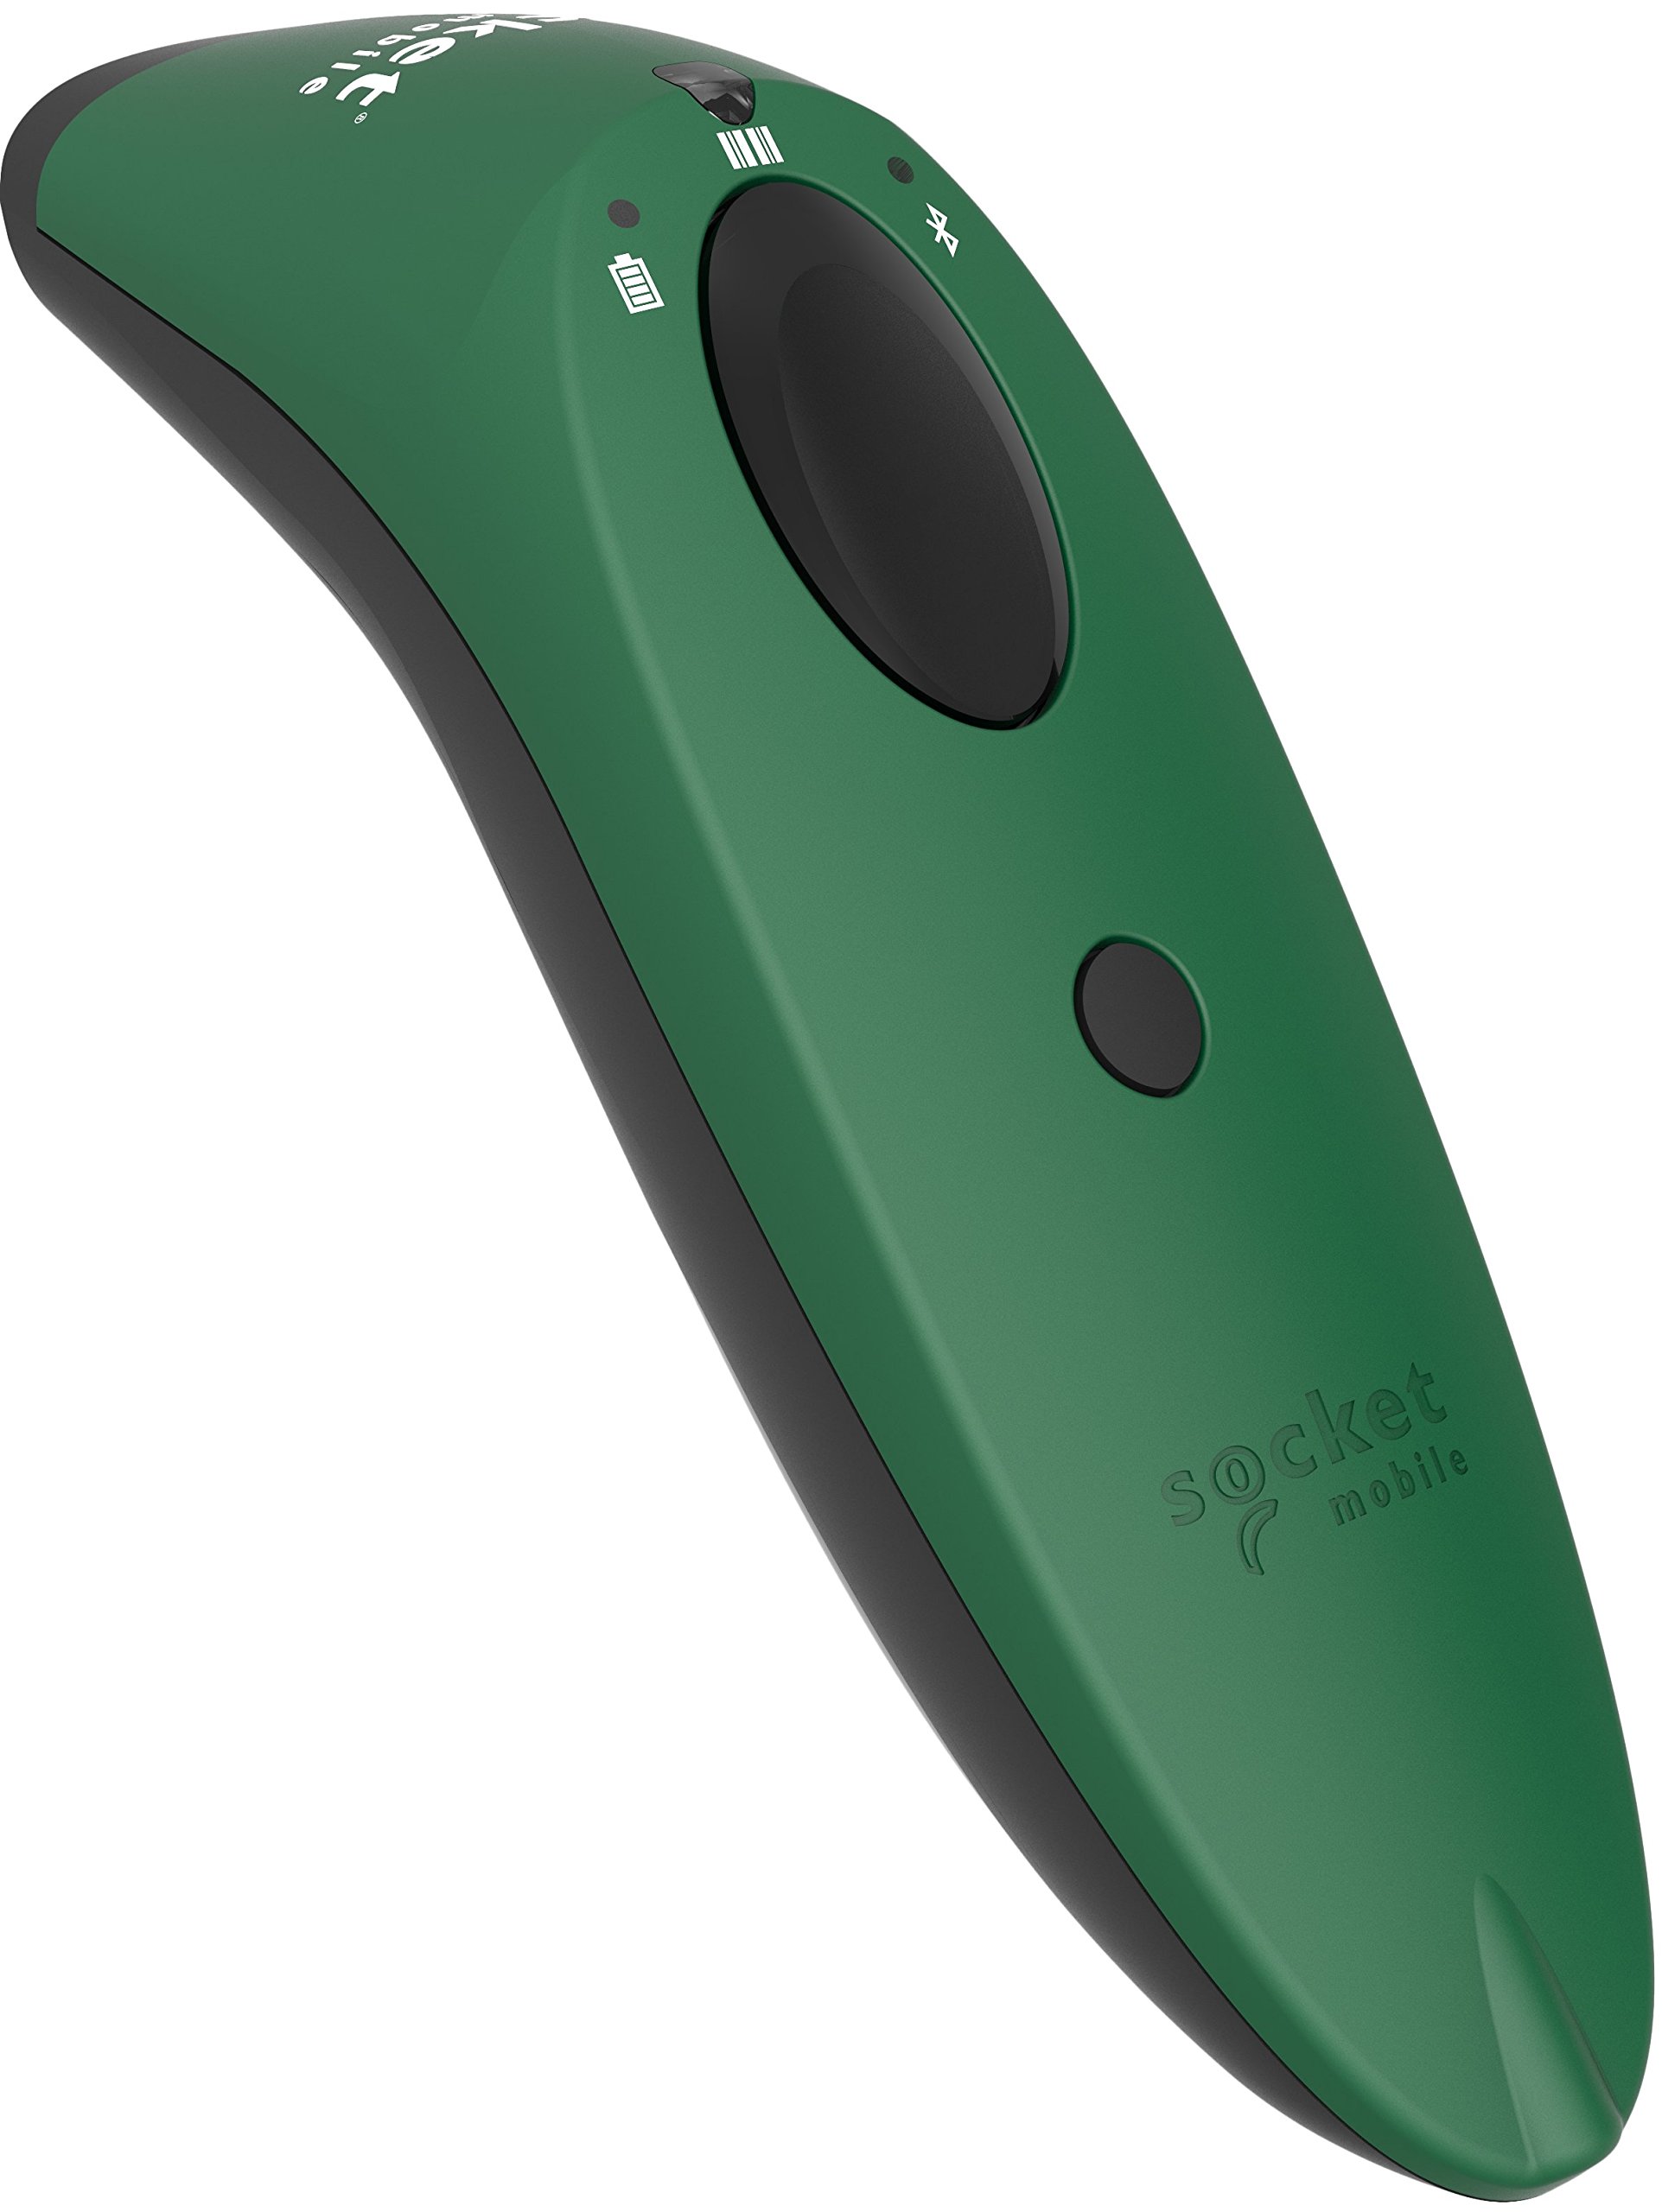 SOCKET - CX3395-1853 Scan S700, 1D Imager Barcode Scanner, Green